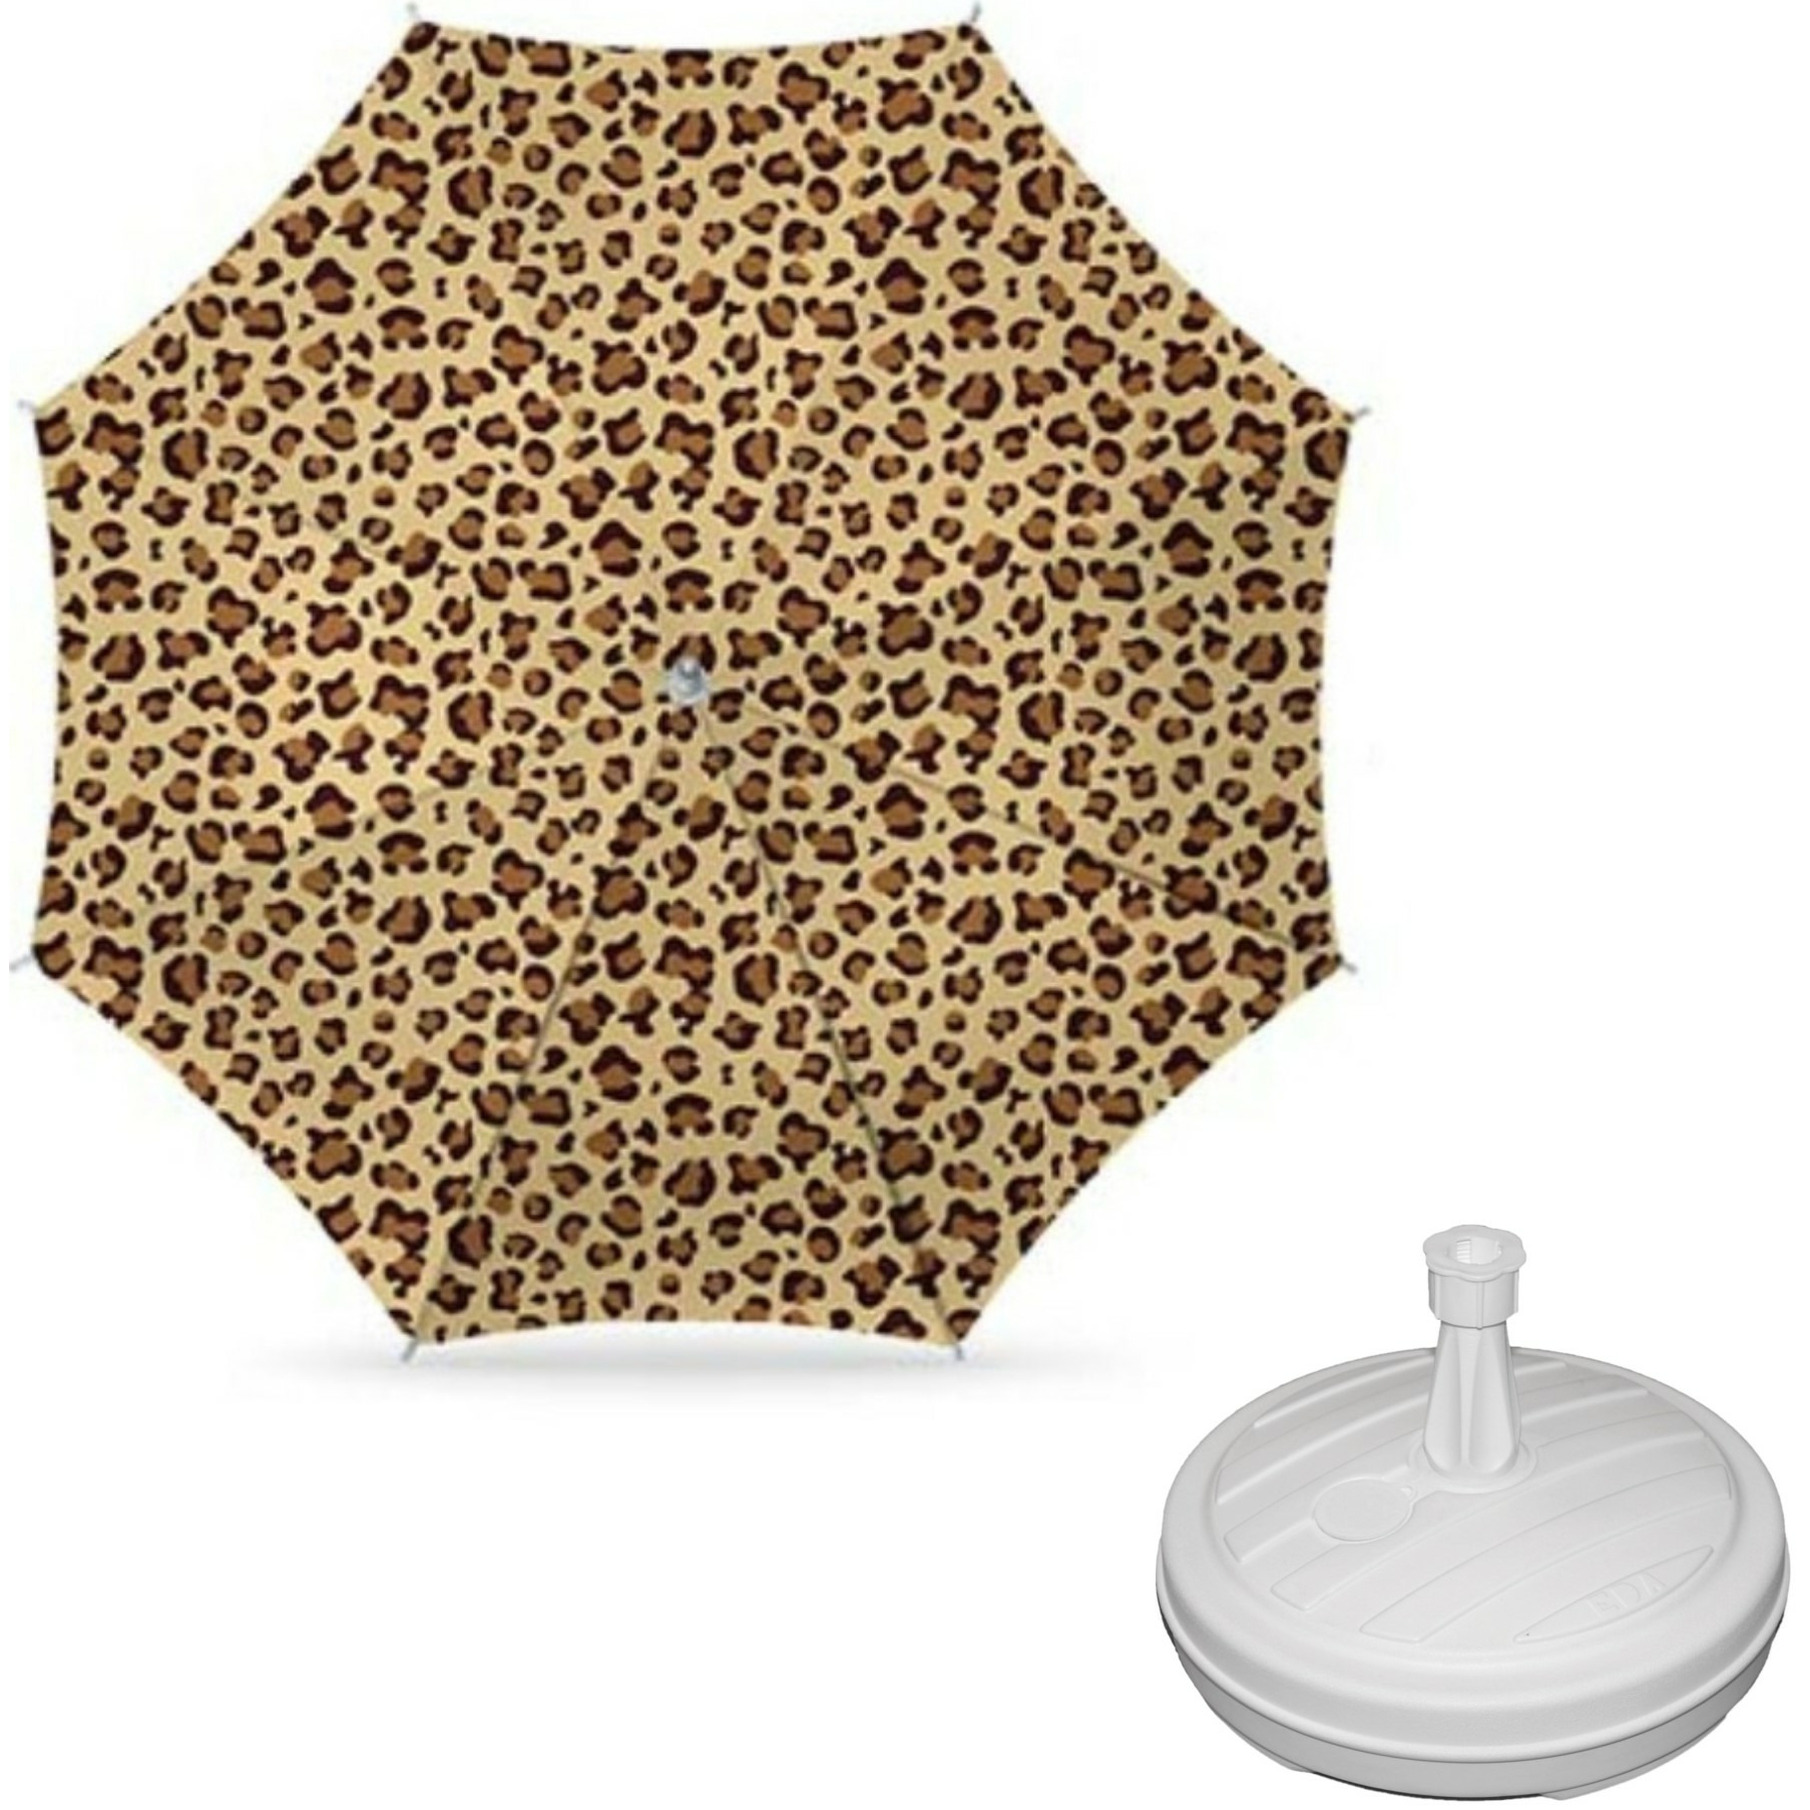 Parasol luipaard print D160 cm incl. draagtas parasolvoet 42 cm